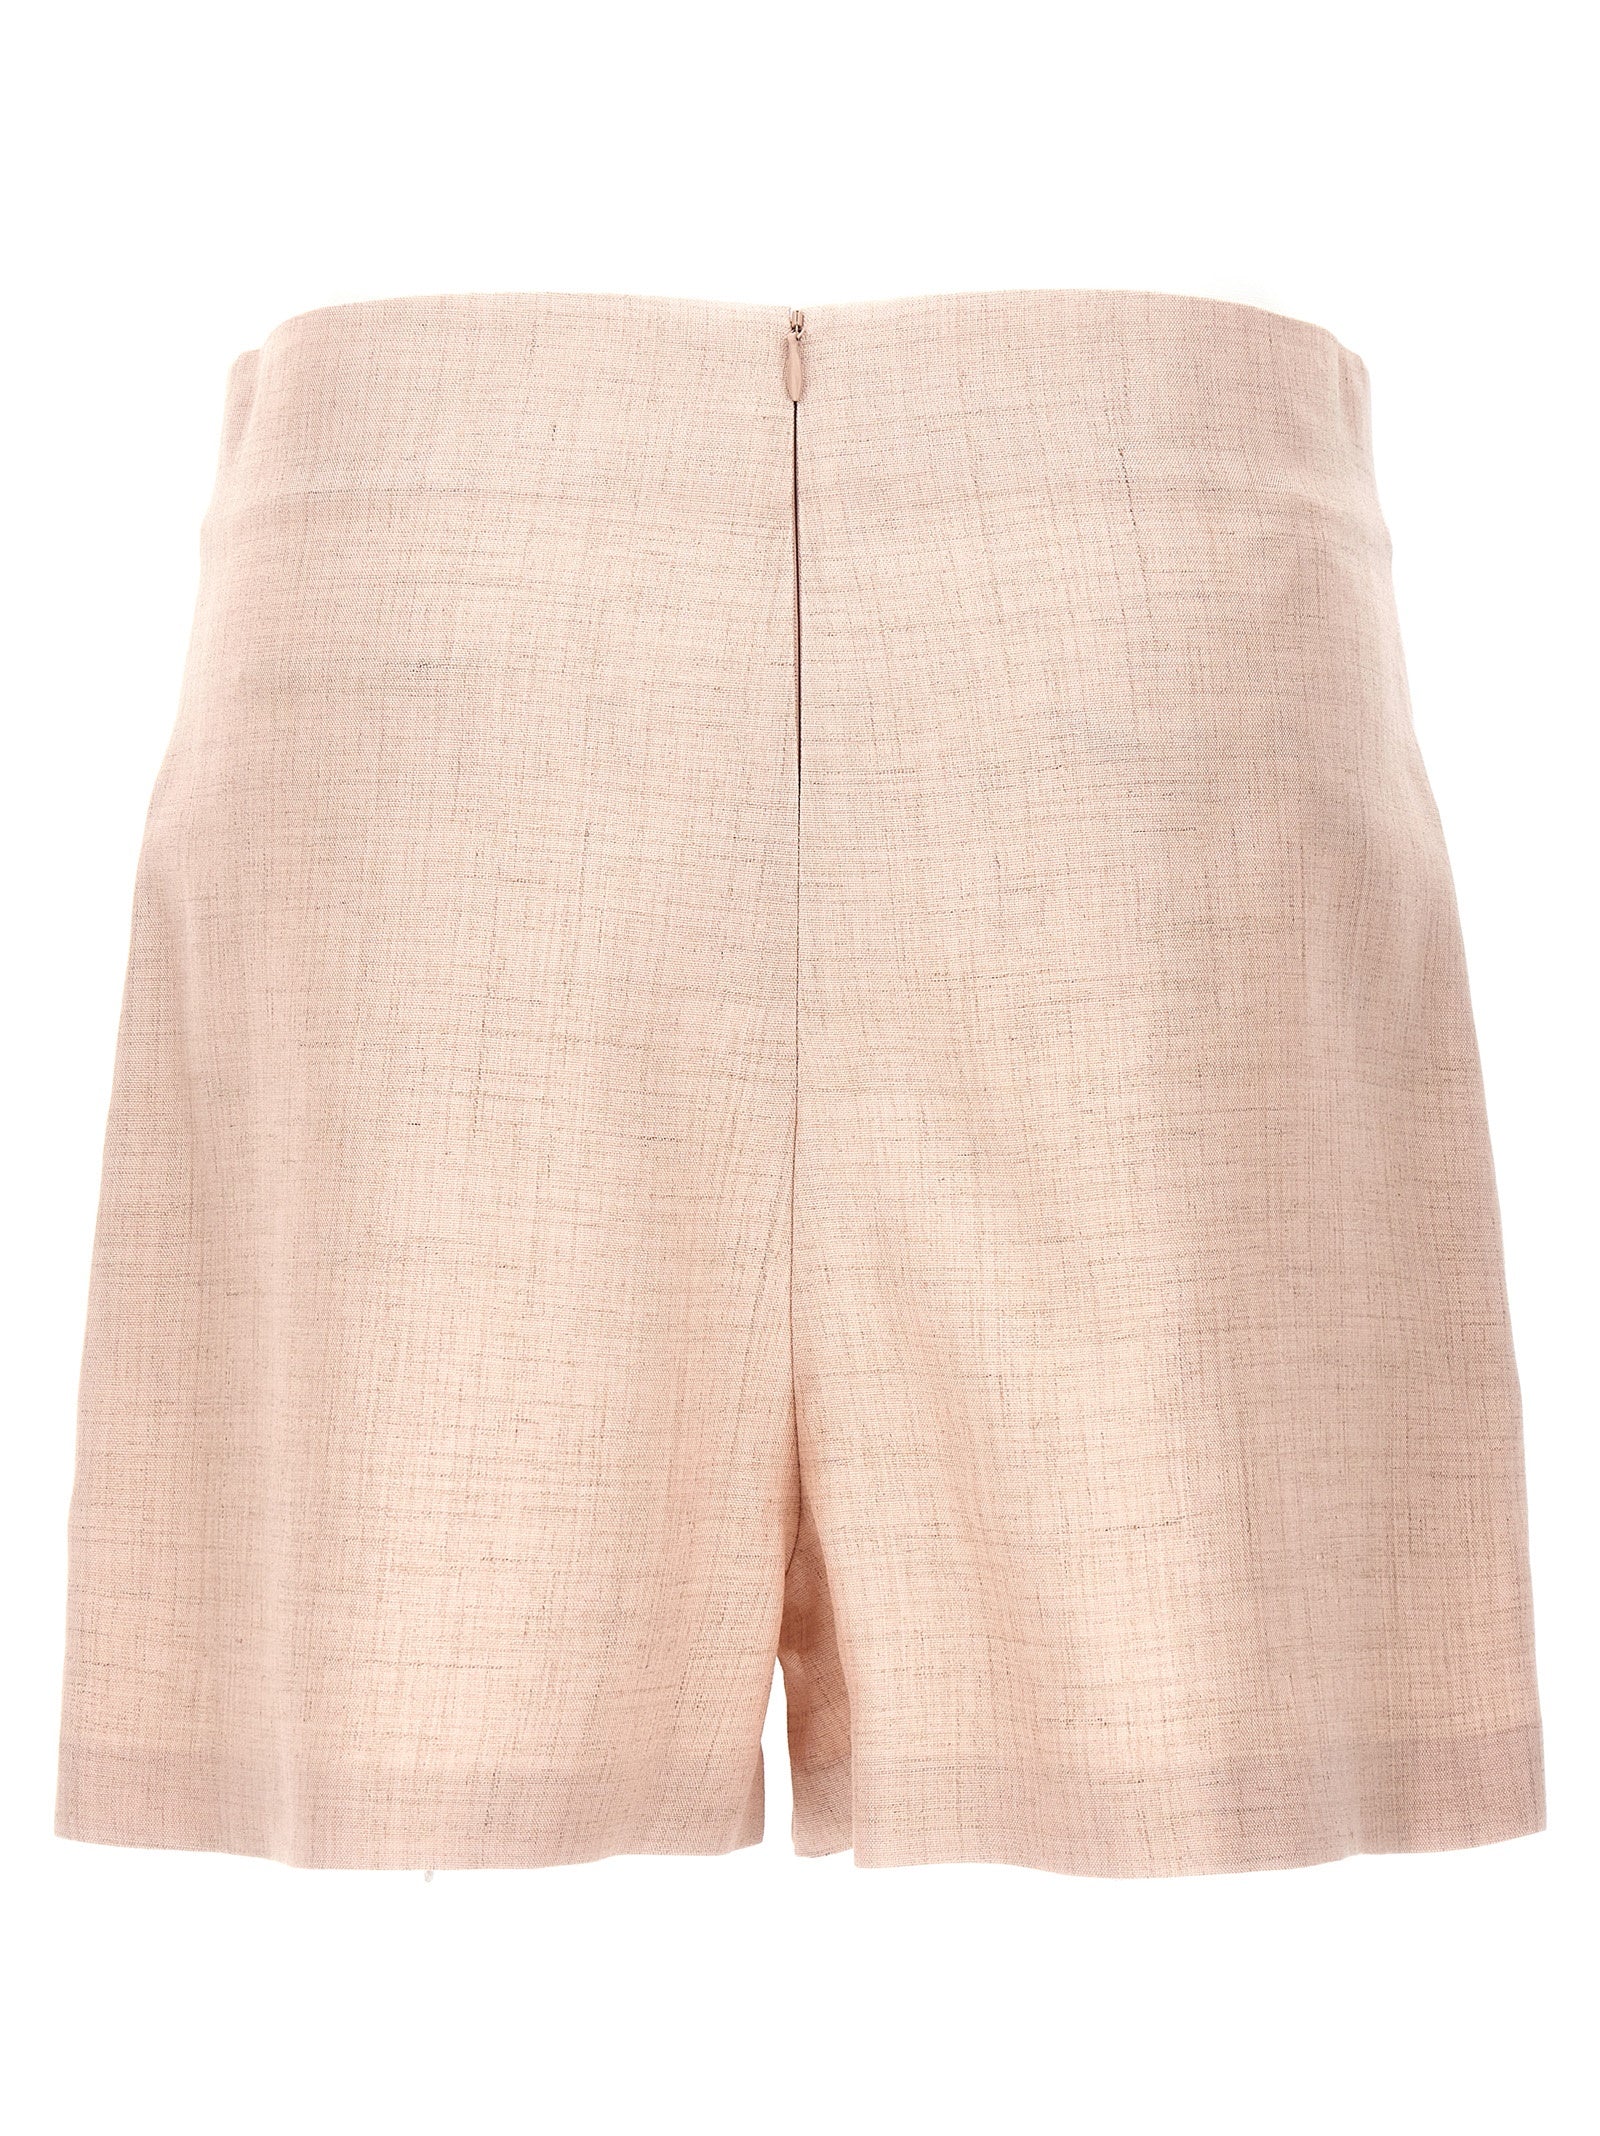 Shop Philosophy Linen Blend Shorts Bermuda, Short Pink